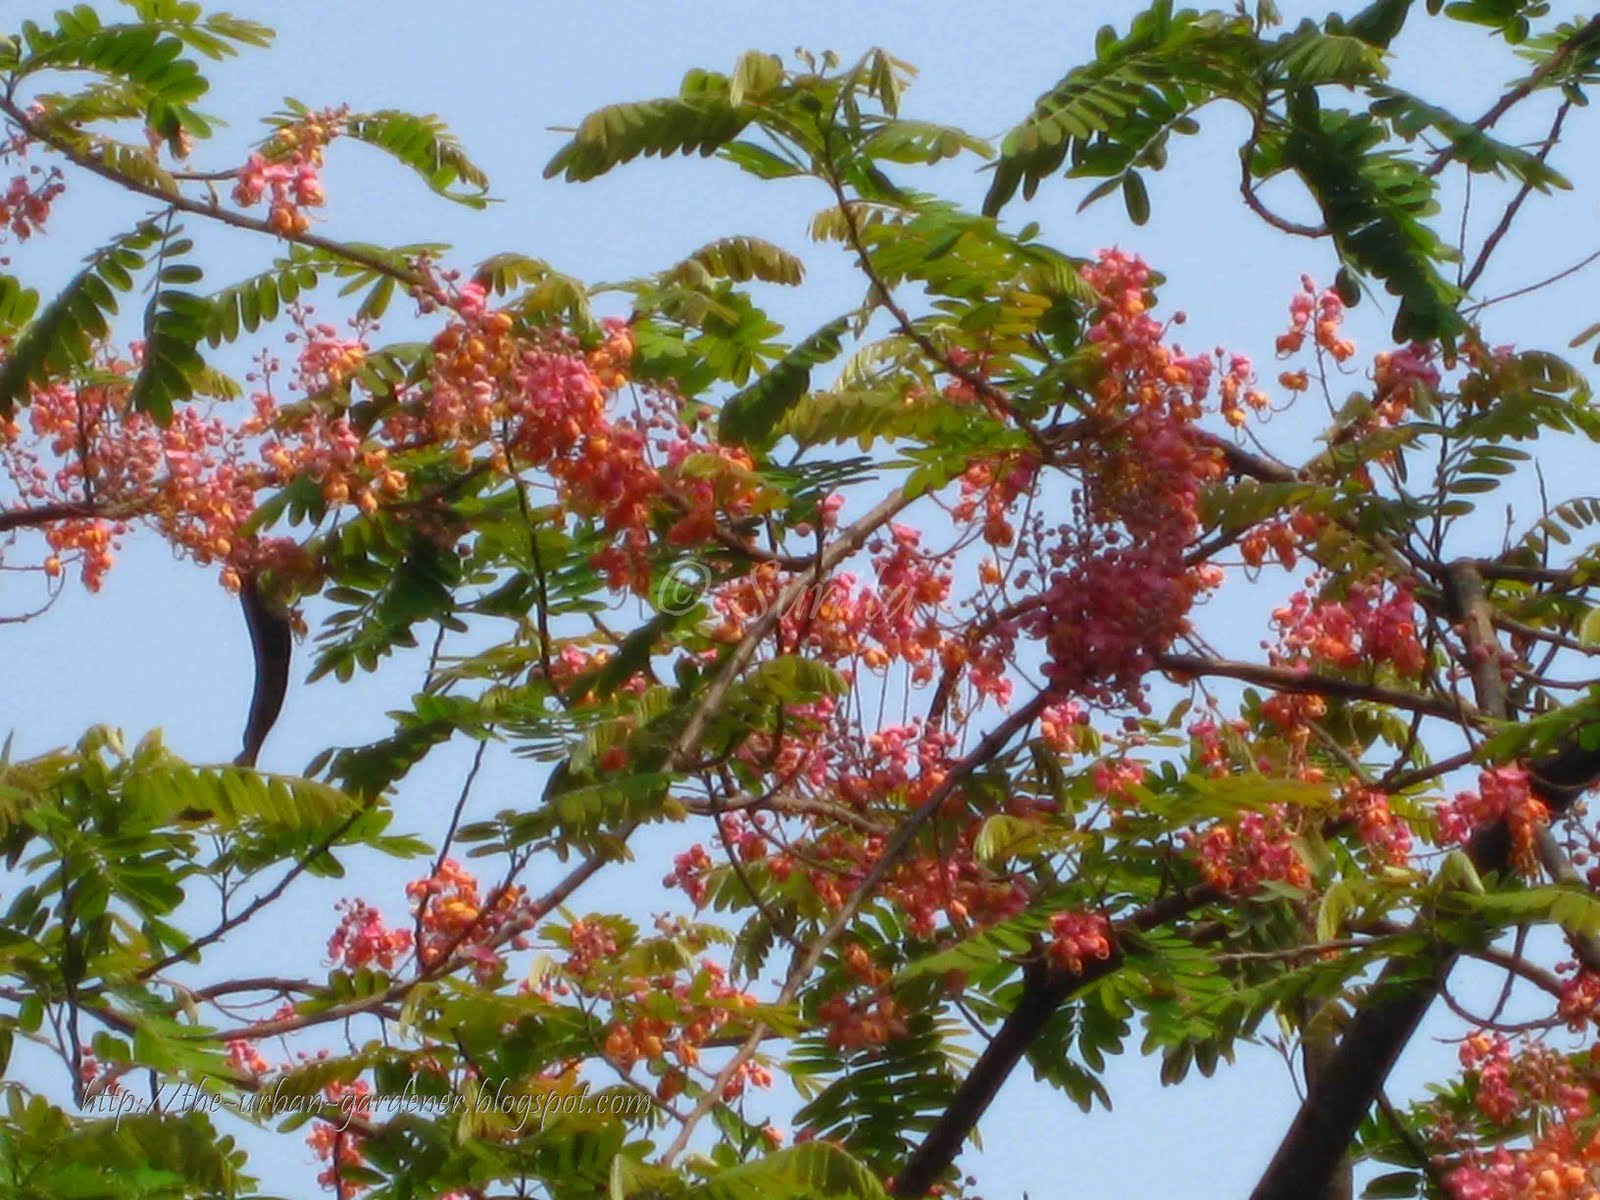 The Urban Gardener: Summer sherbet : Mumbai's flowering trees